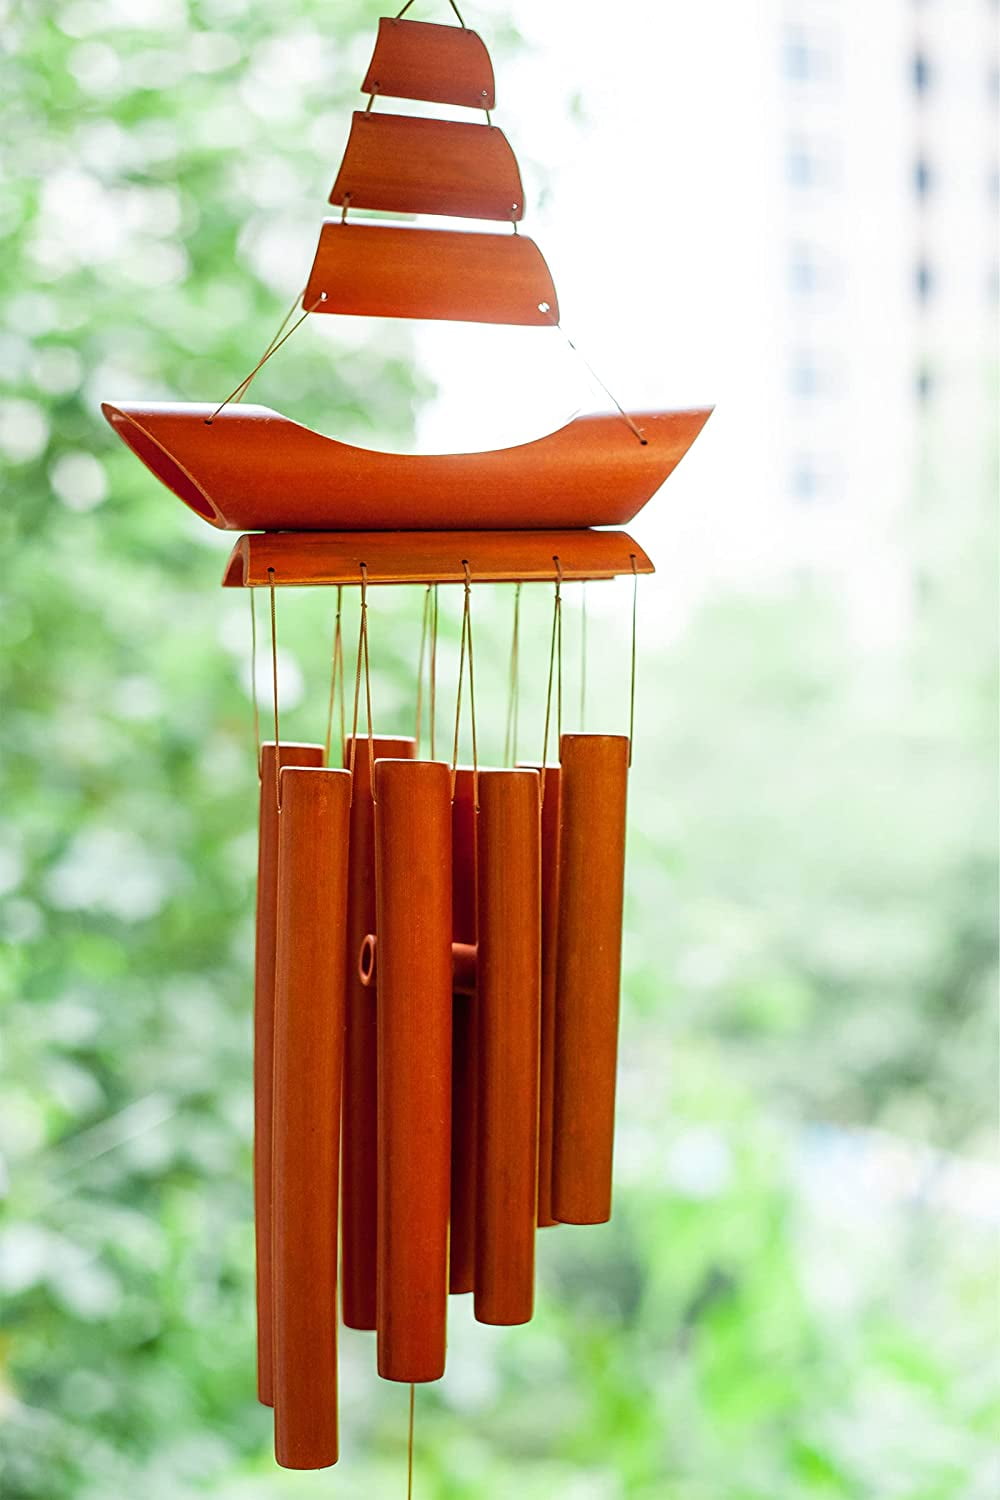 Handmade Bamboo Wind Chime Home 6 Tubes Hanging Bell Garden Door Ornament 